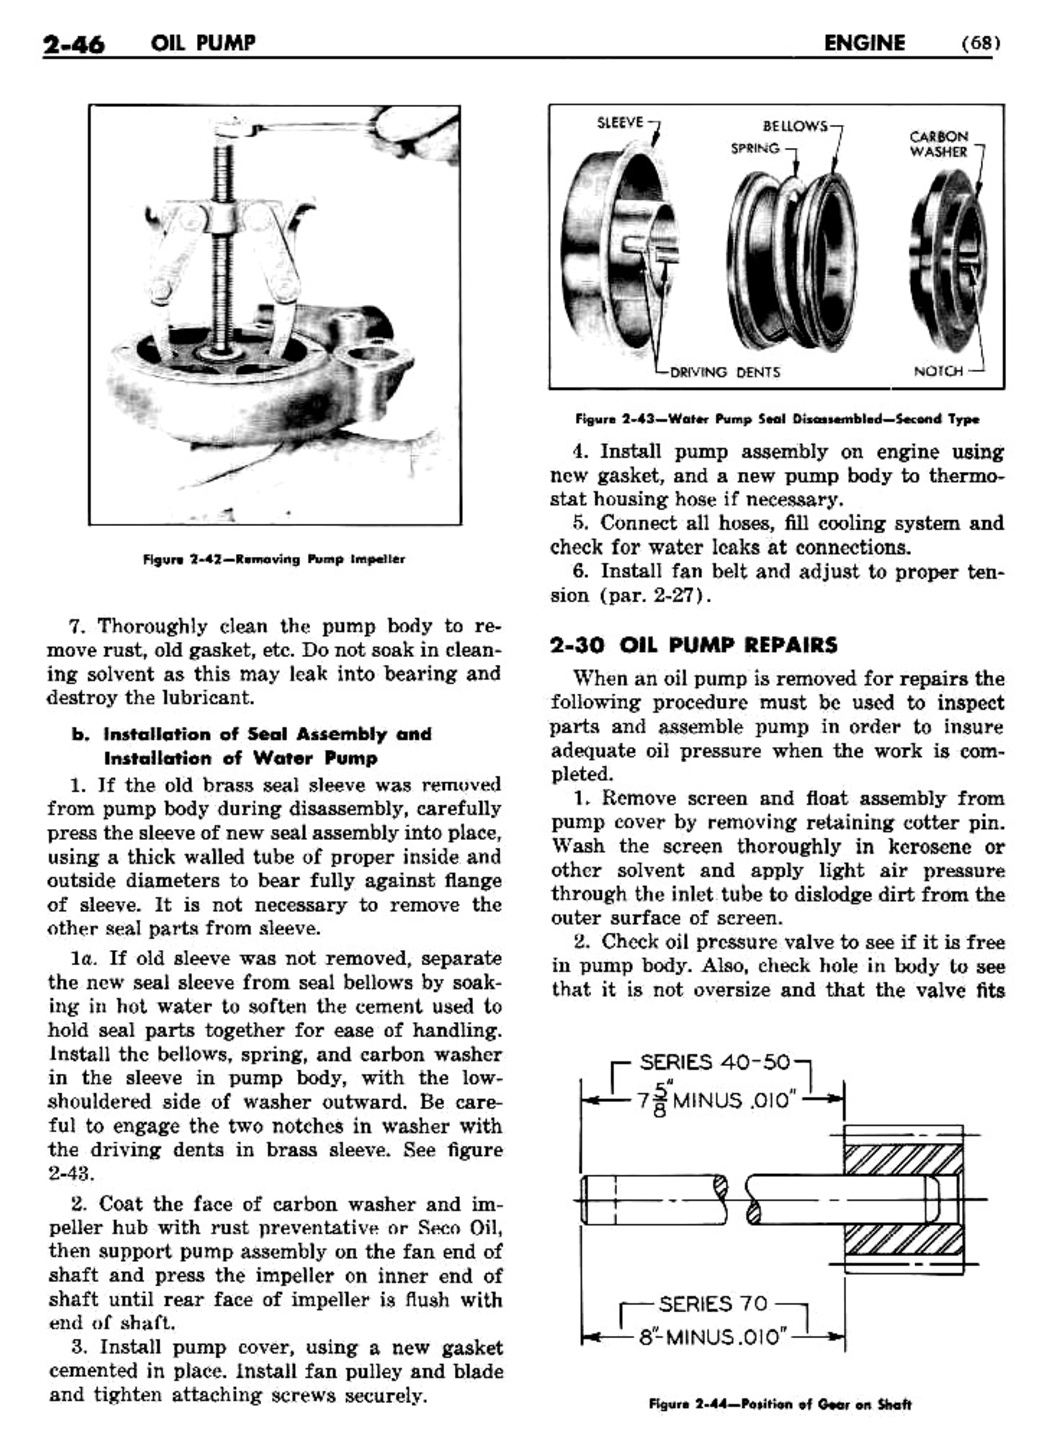 n_03 1948 Buick Shop Manual - Engine-046-046.jpg